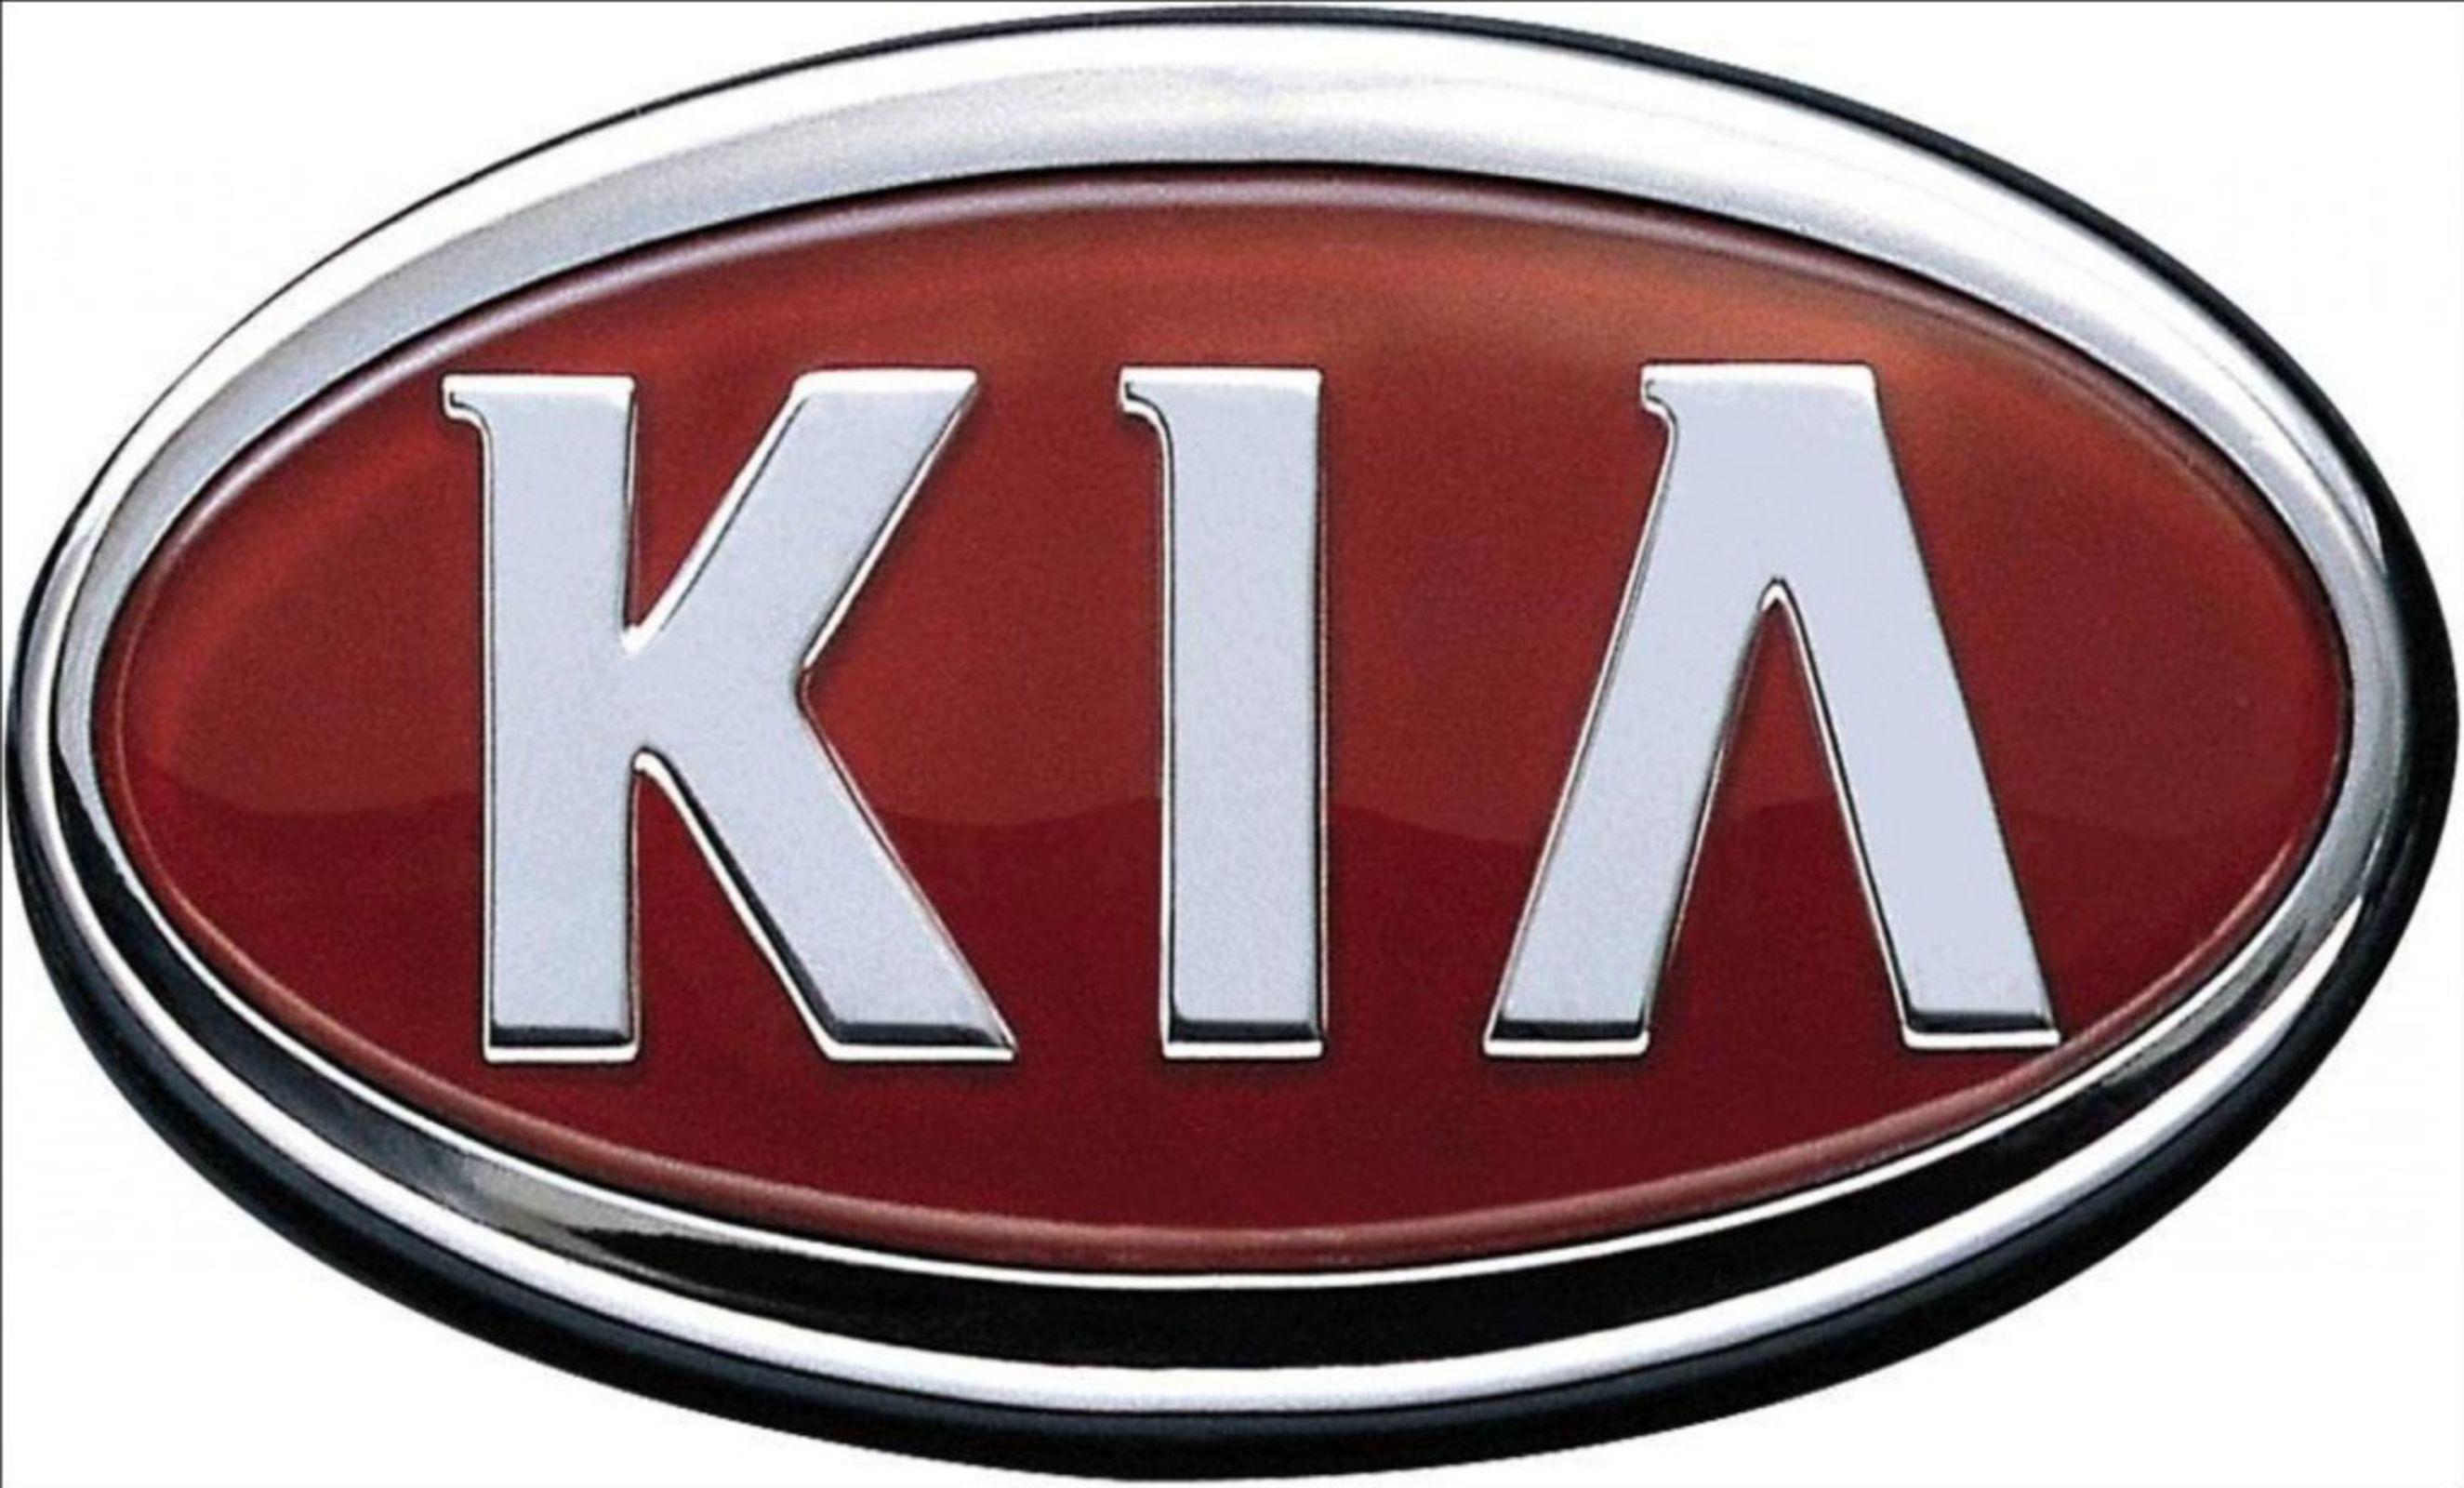 Kia Logo. Kia. Cars. HDR Wallpaper. Free HDR Wallpaper. Kia